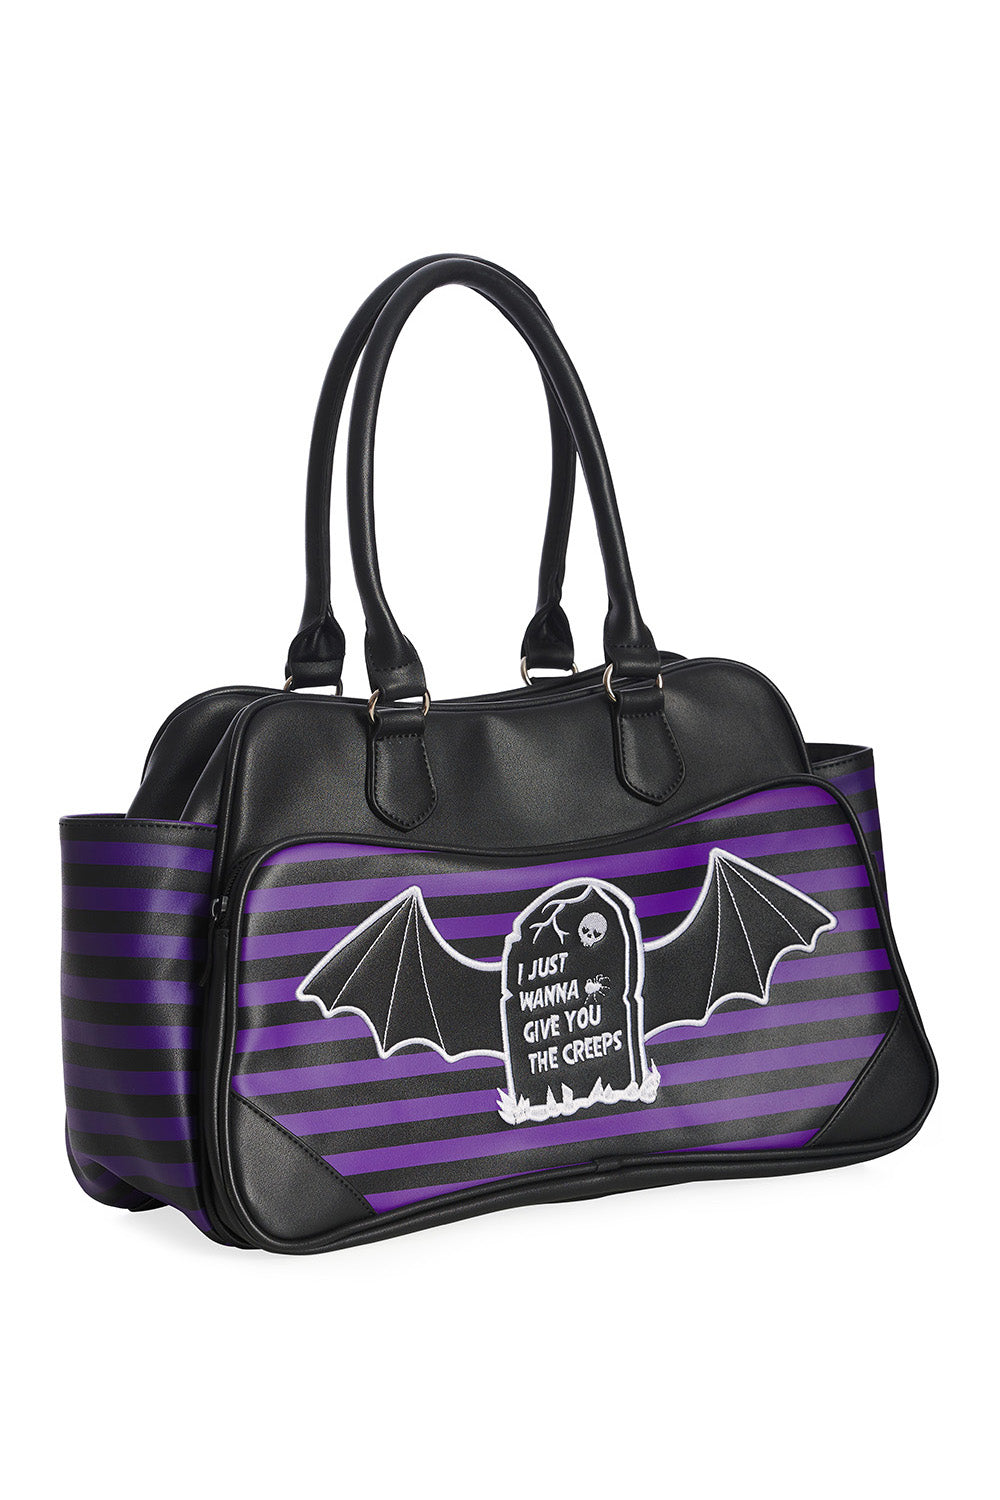 I'm Creepy Striped Bag [Purple/Black]